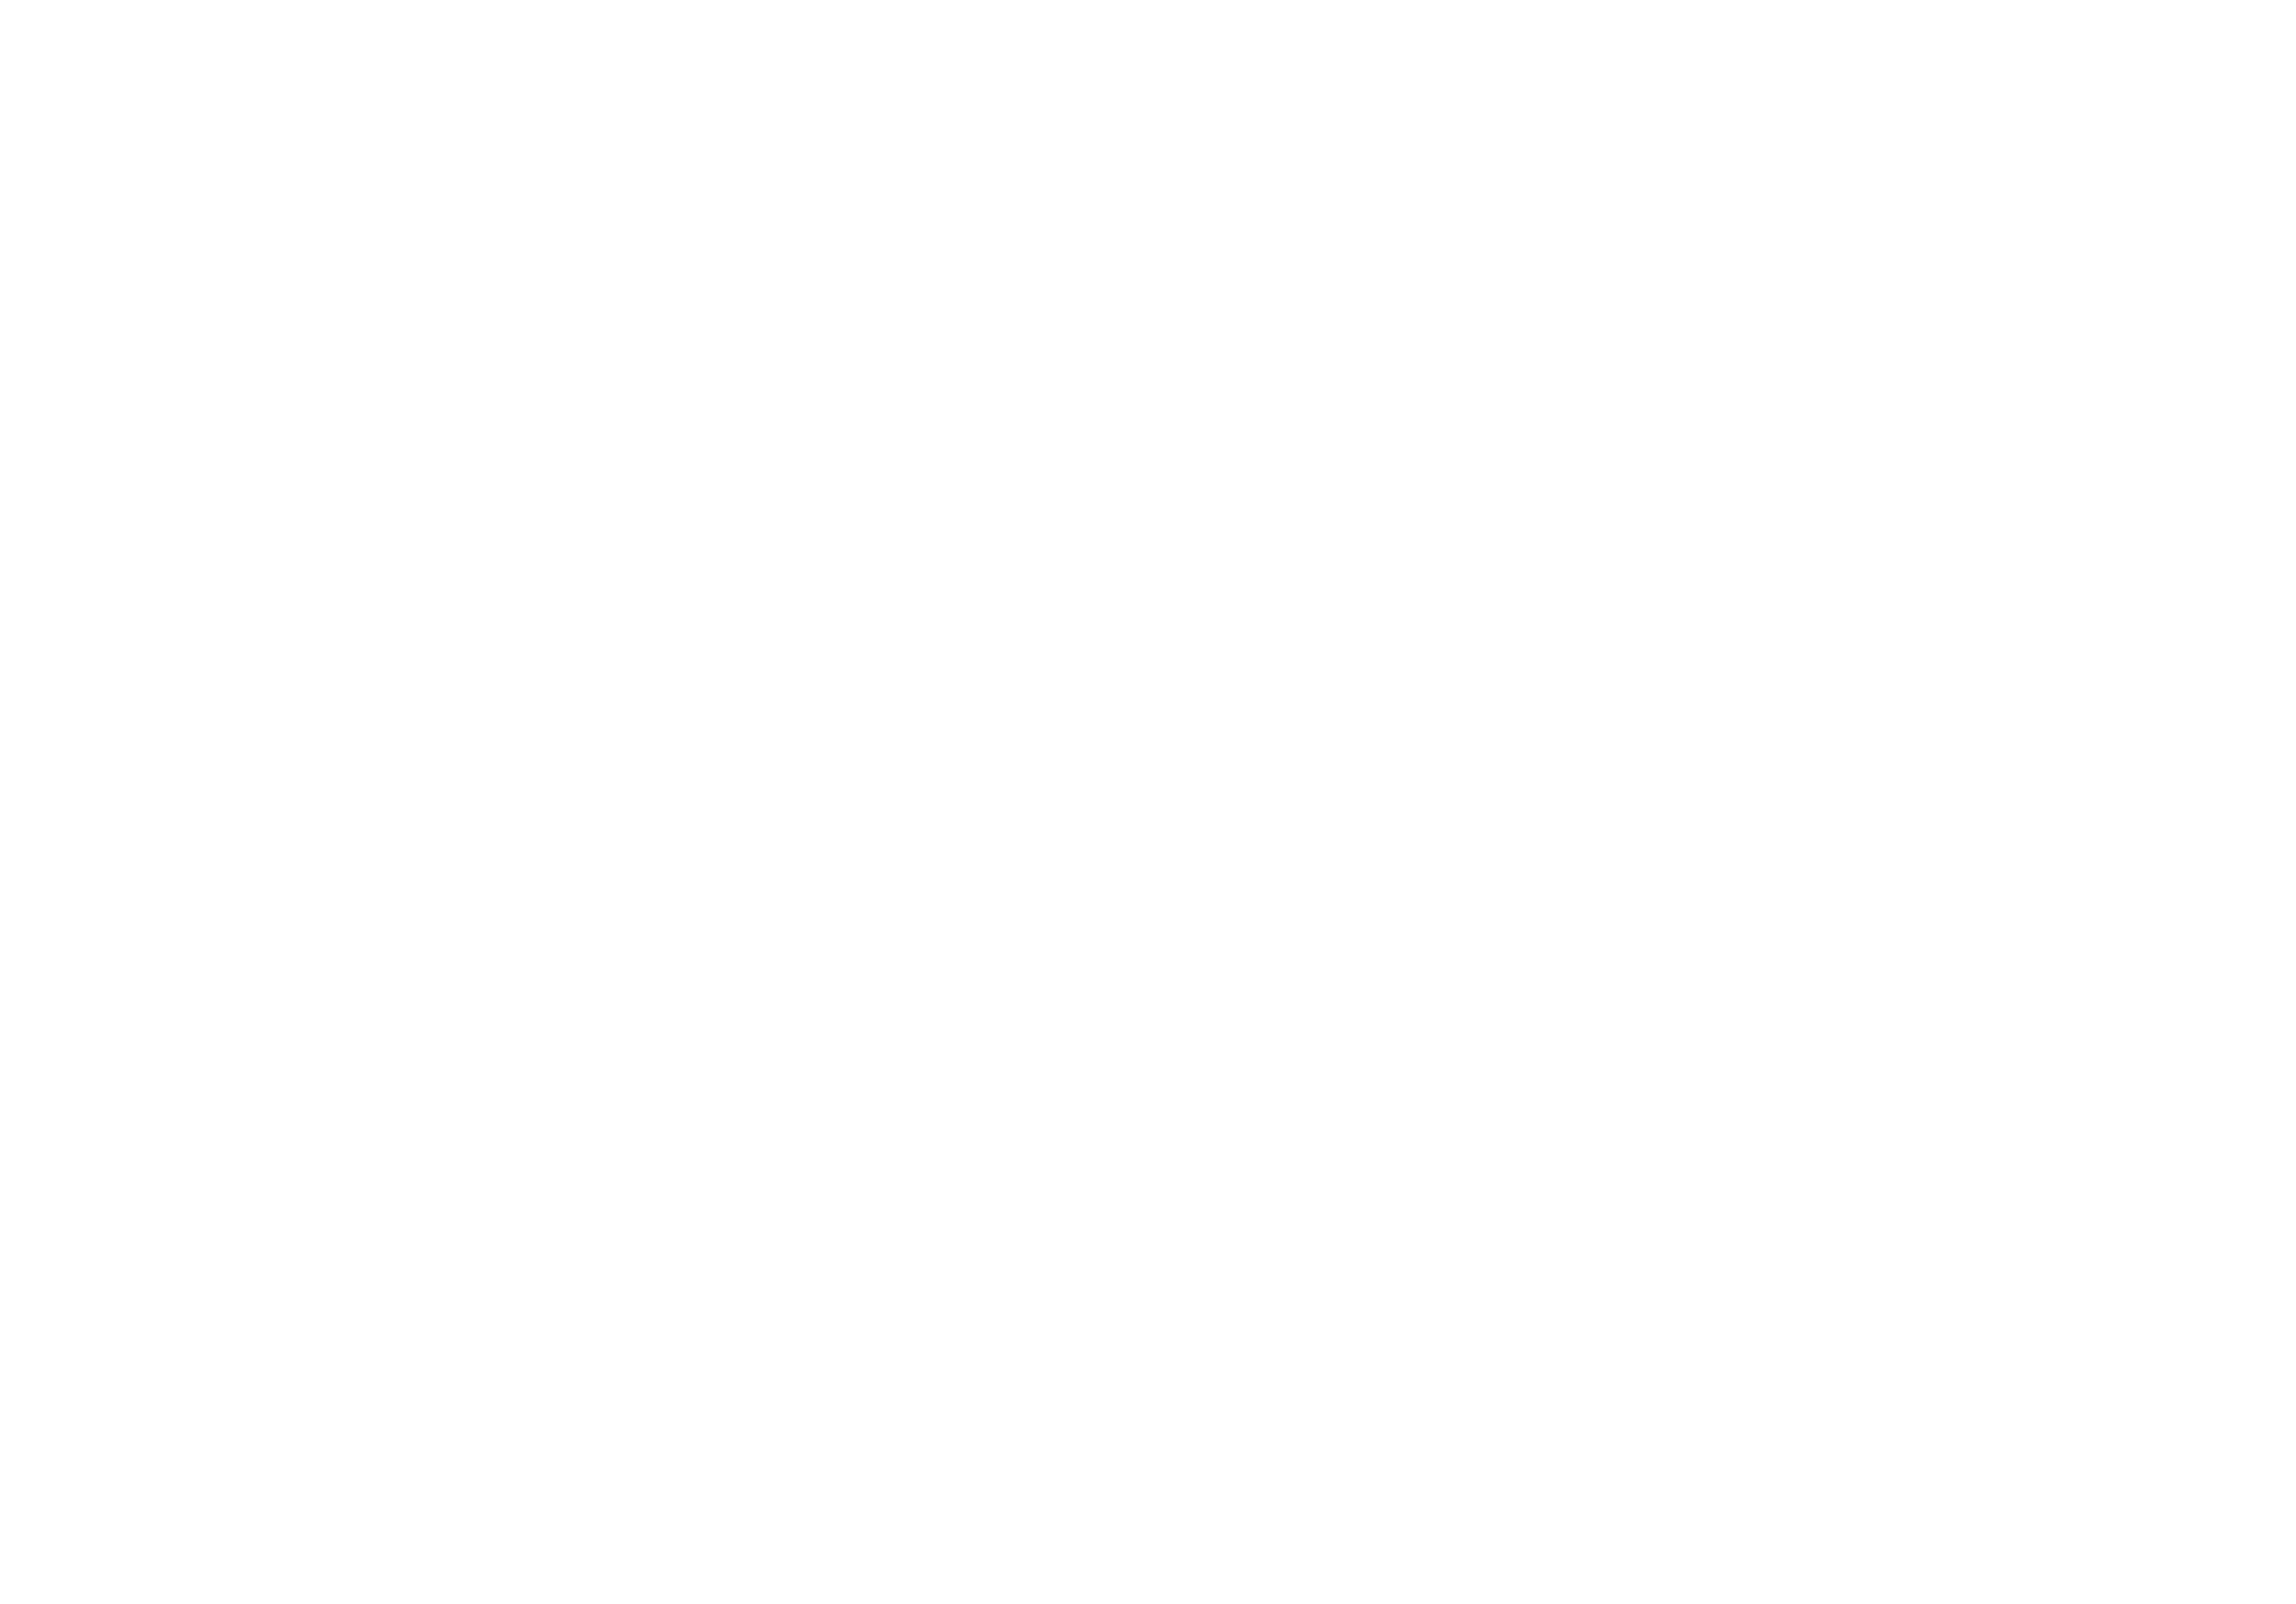 Brigz Tattoos